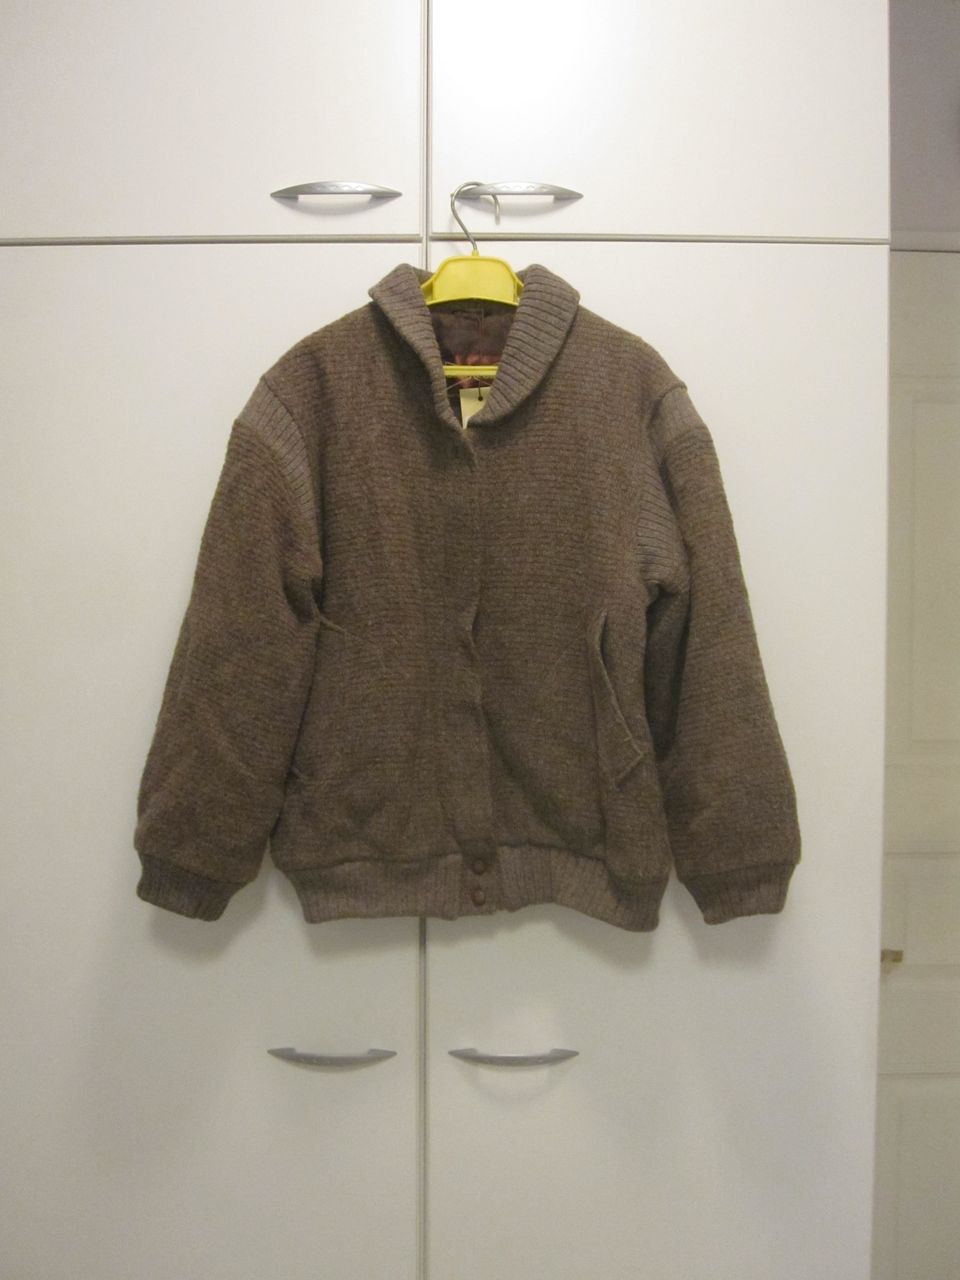 Dixi coat Made  in Finland By Teiniasu